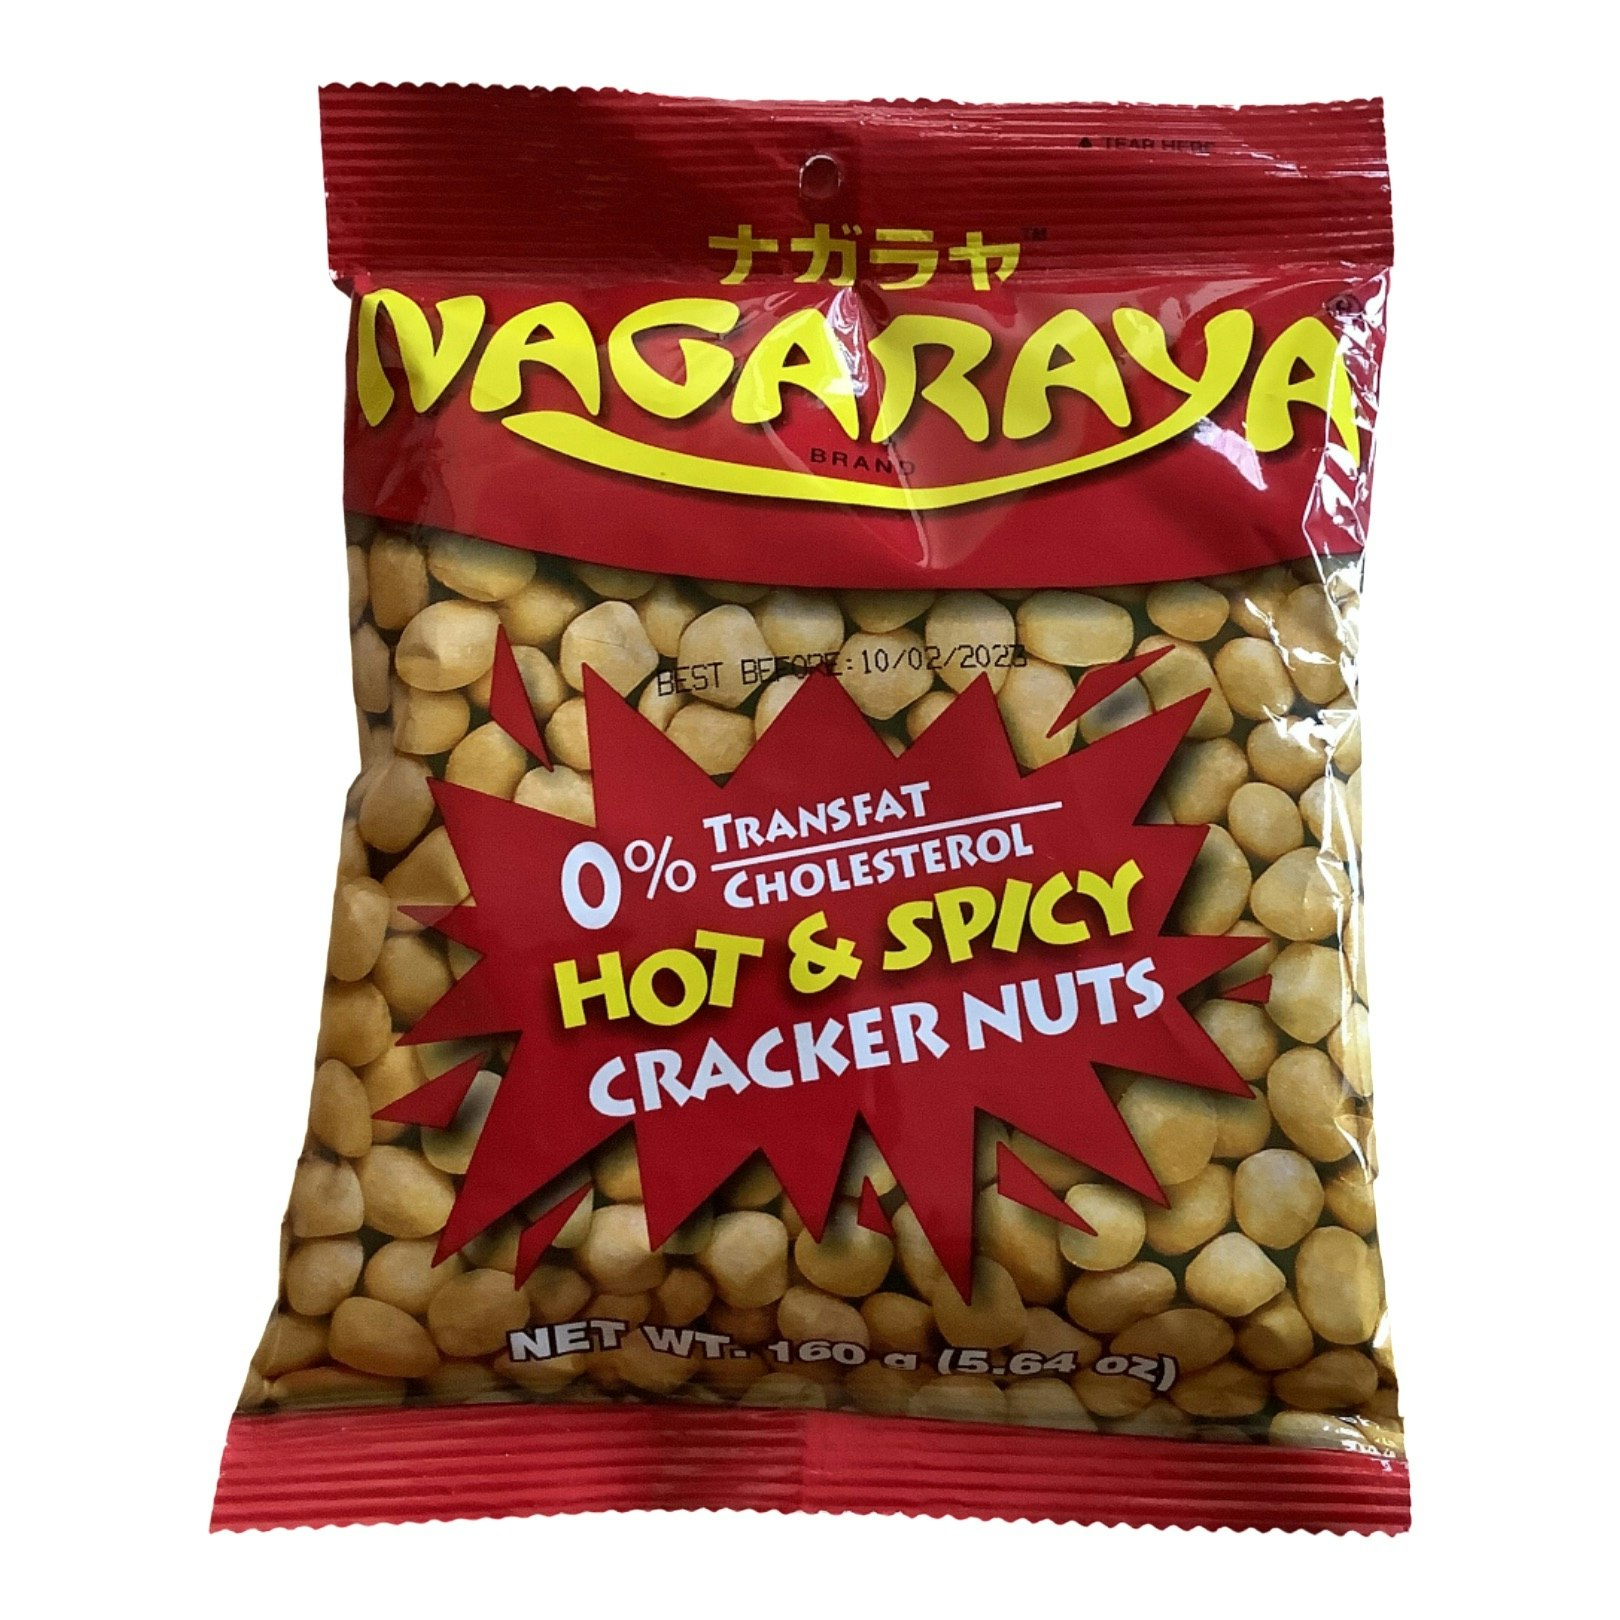 Nagaraya HOT & SPICY Cracker Nuts 160g